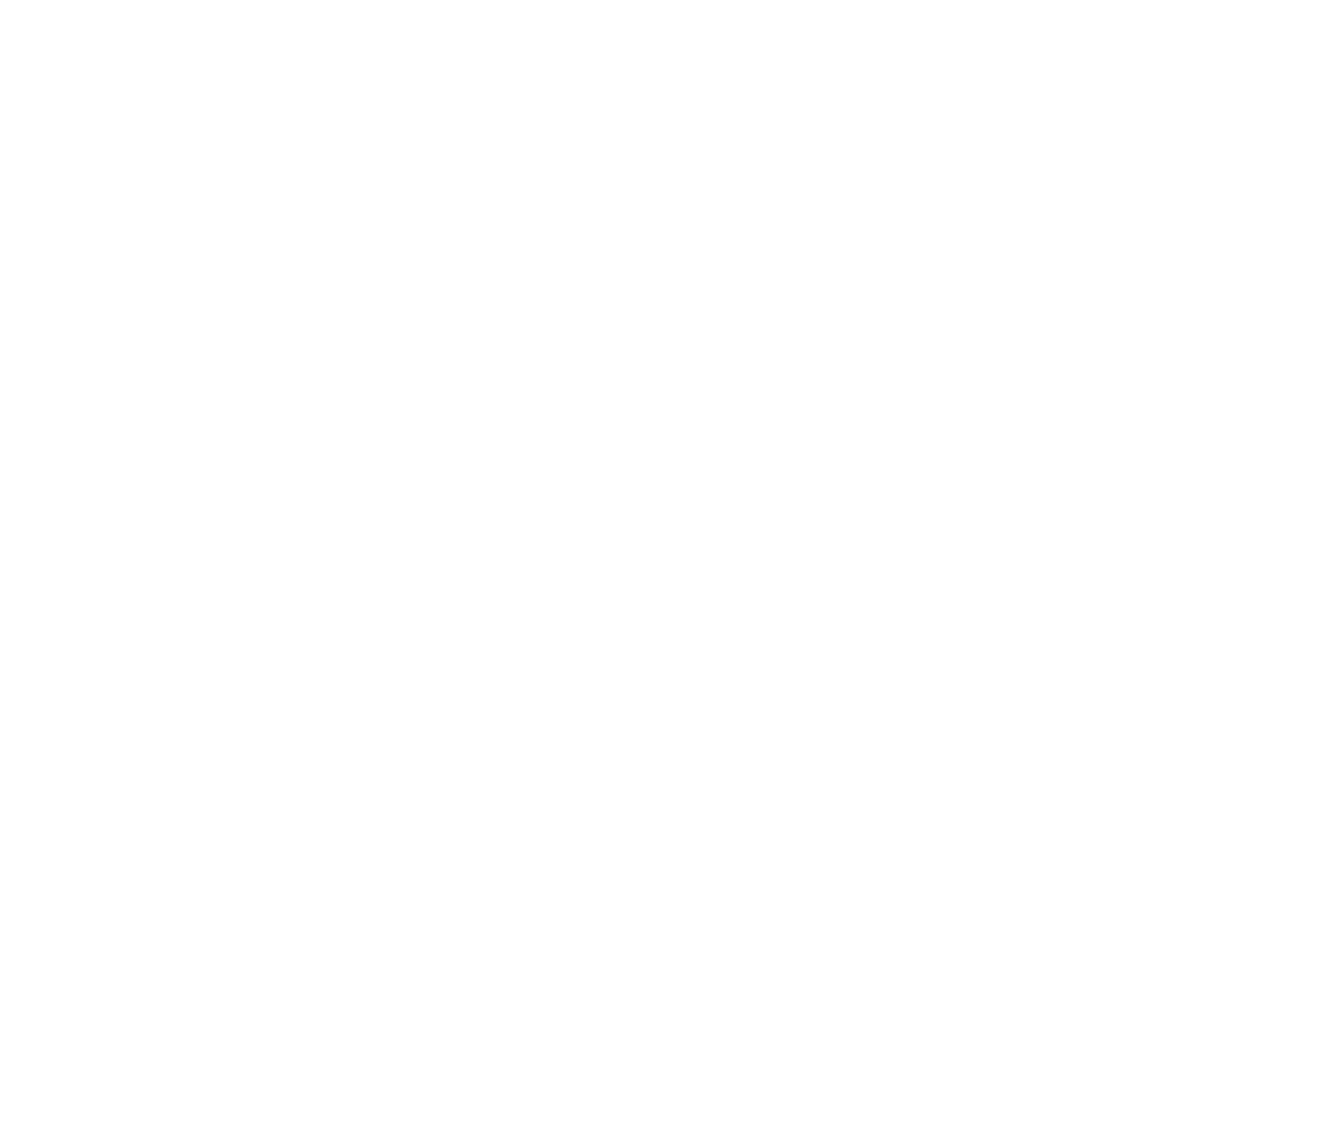 MV Engineering Services